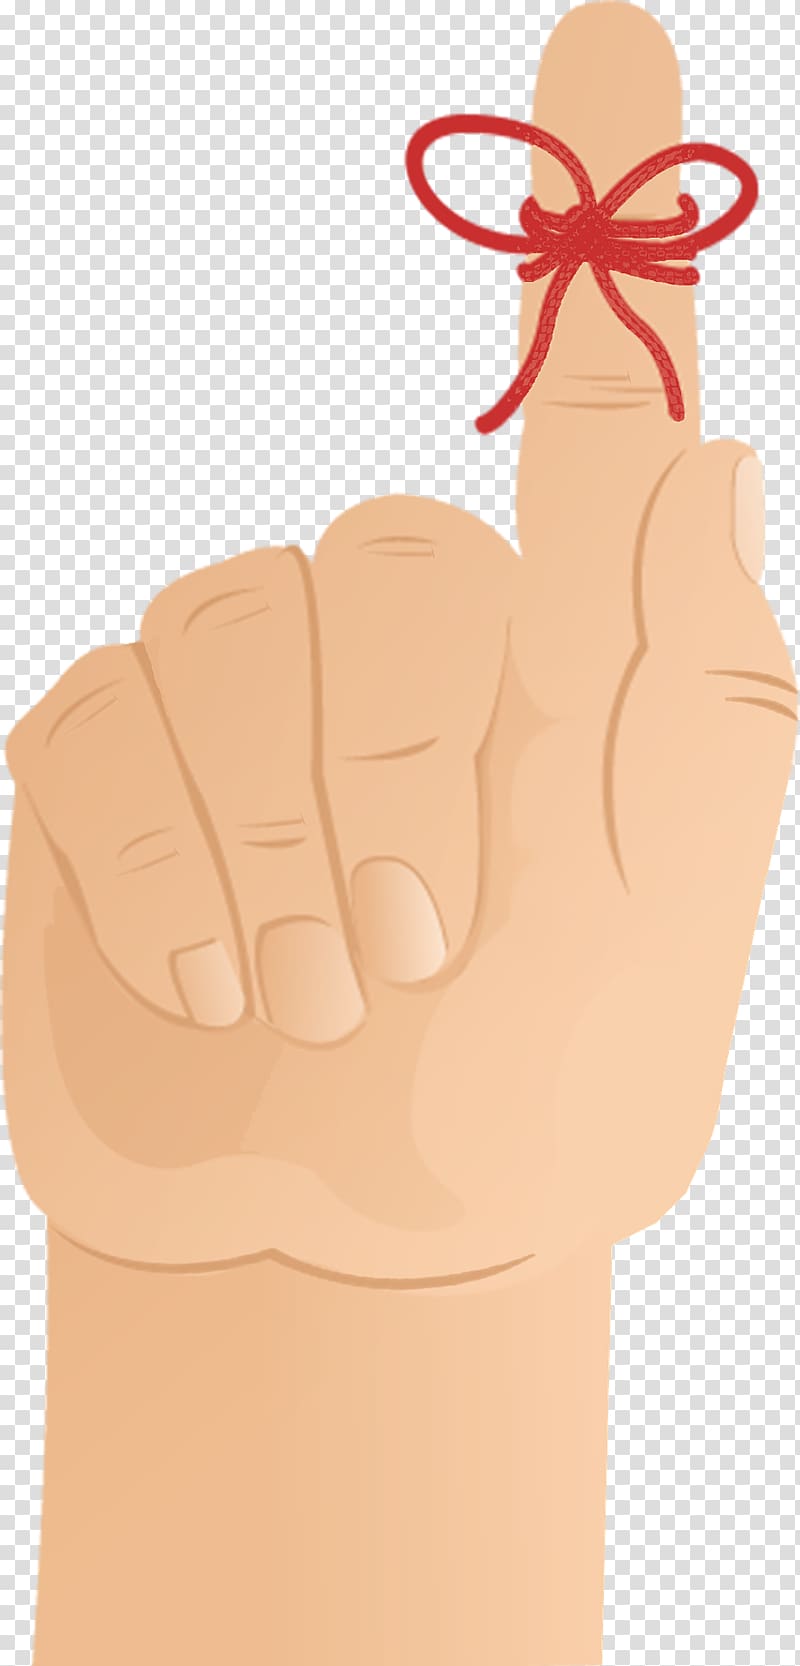 Index finger Thumb, fingers transparent background PNG clipart